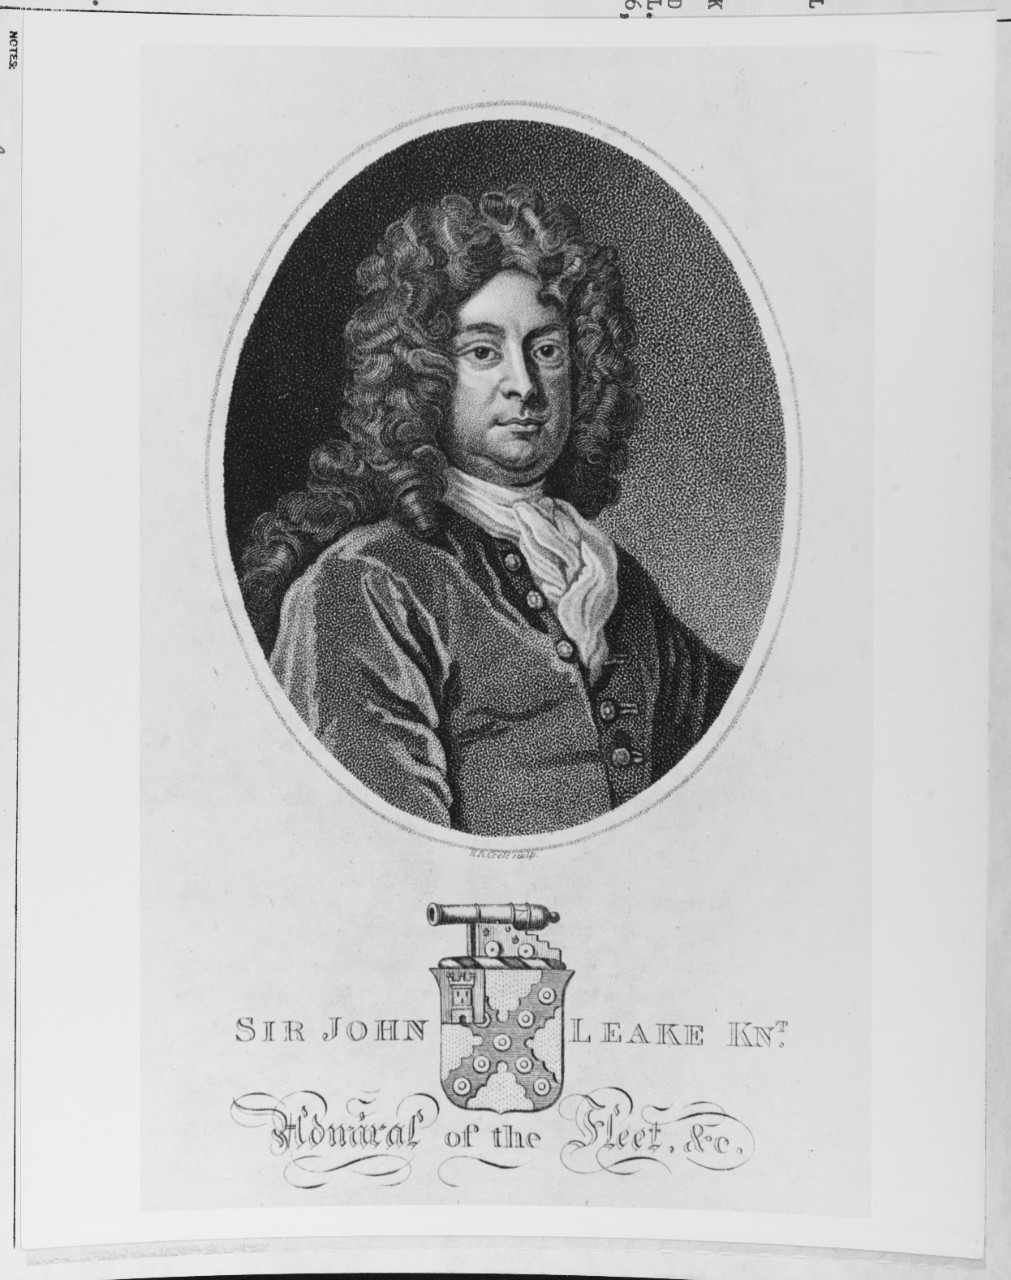 Sir John Leake (1656 - 1726), Admiral of the Fleet, Royal Navy